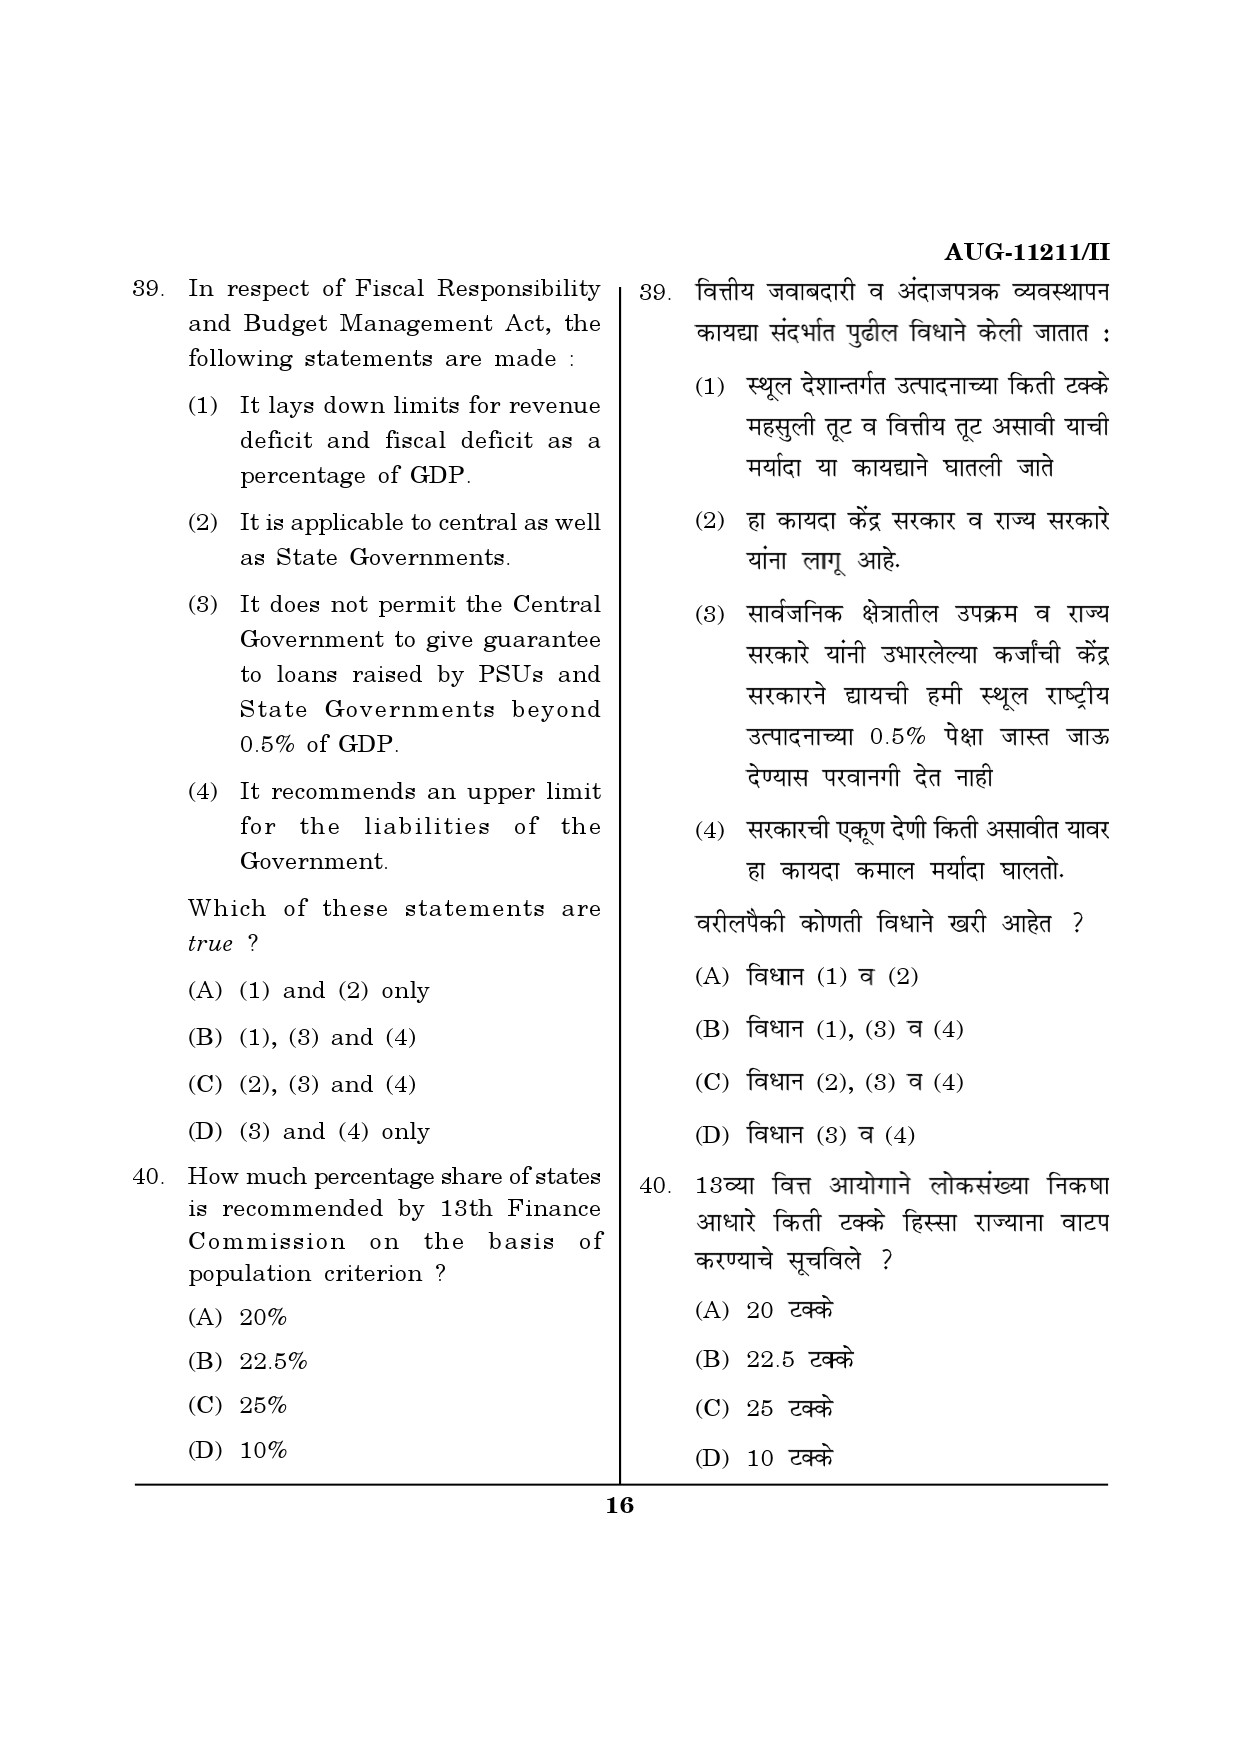 Maharashtra SET Economics Question Paper II August 2011 16